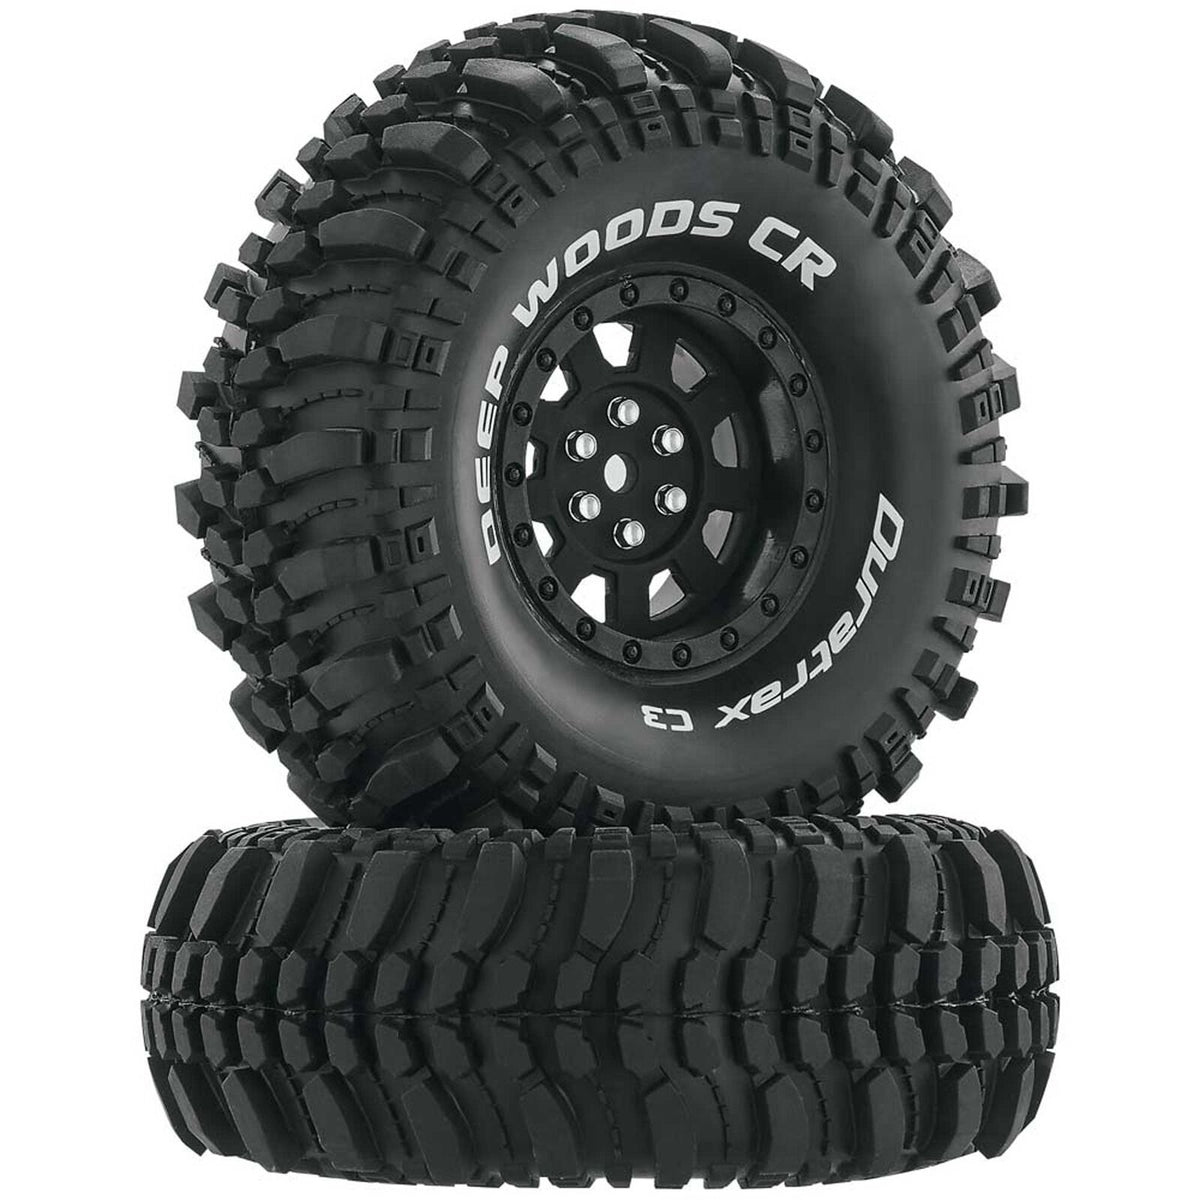 Duratrax Deep Woods CR C3 Mounted 1.9" Crawler Tires, Black (2) (DTXC4026)